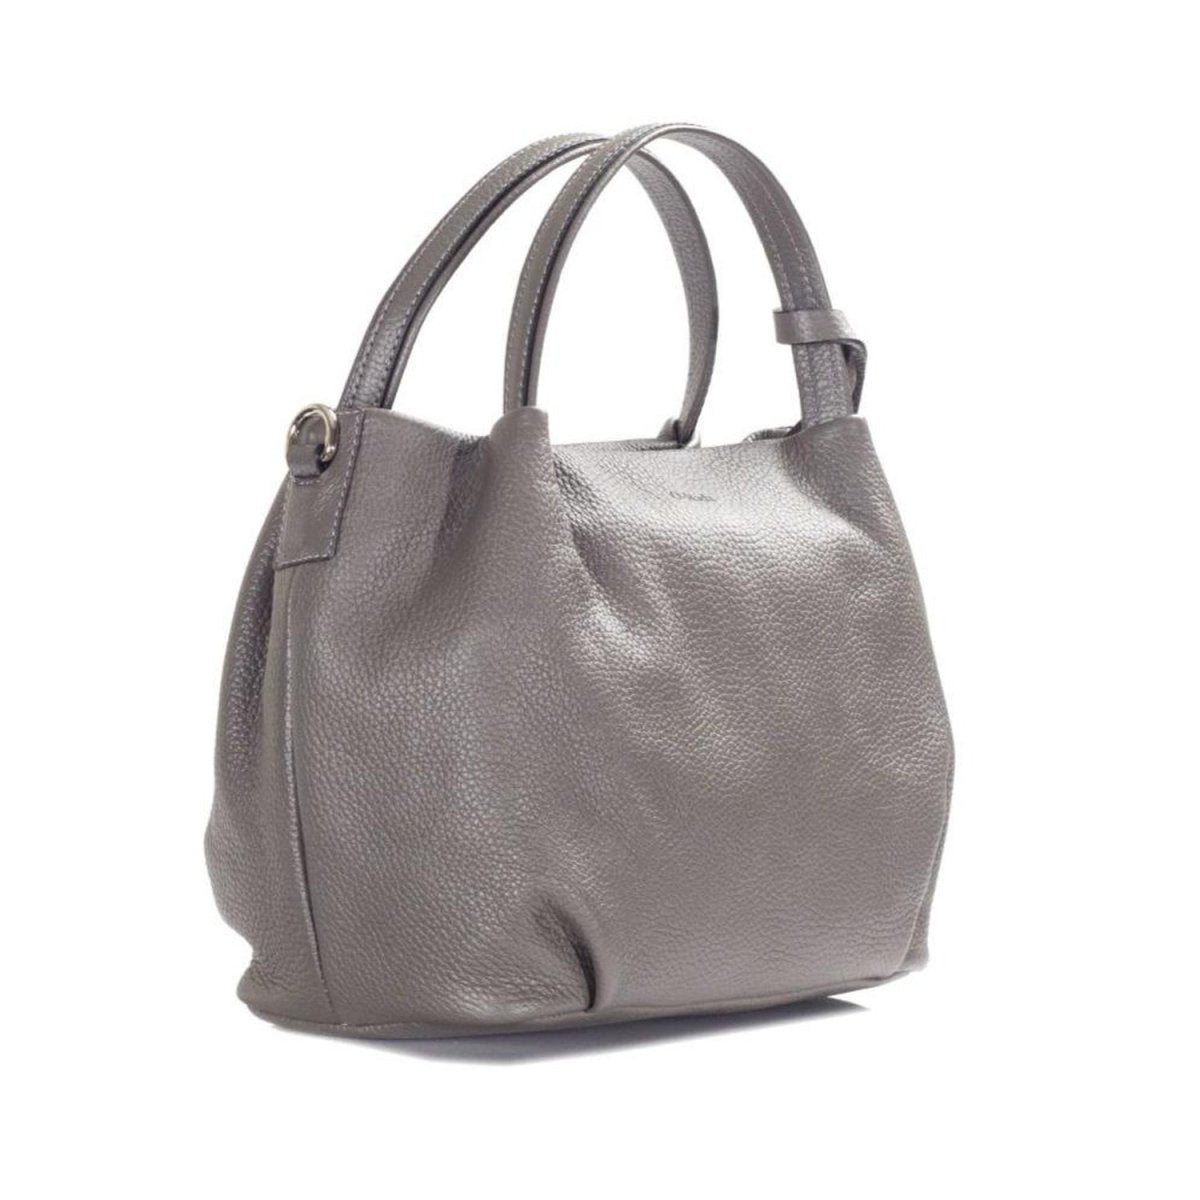 Selina Premium Pebbled Leather Handbag - Ozzell London